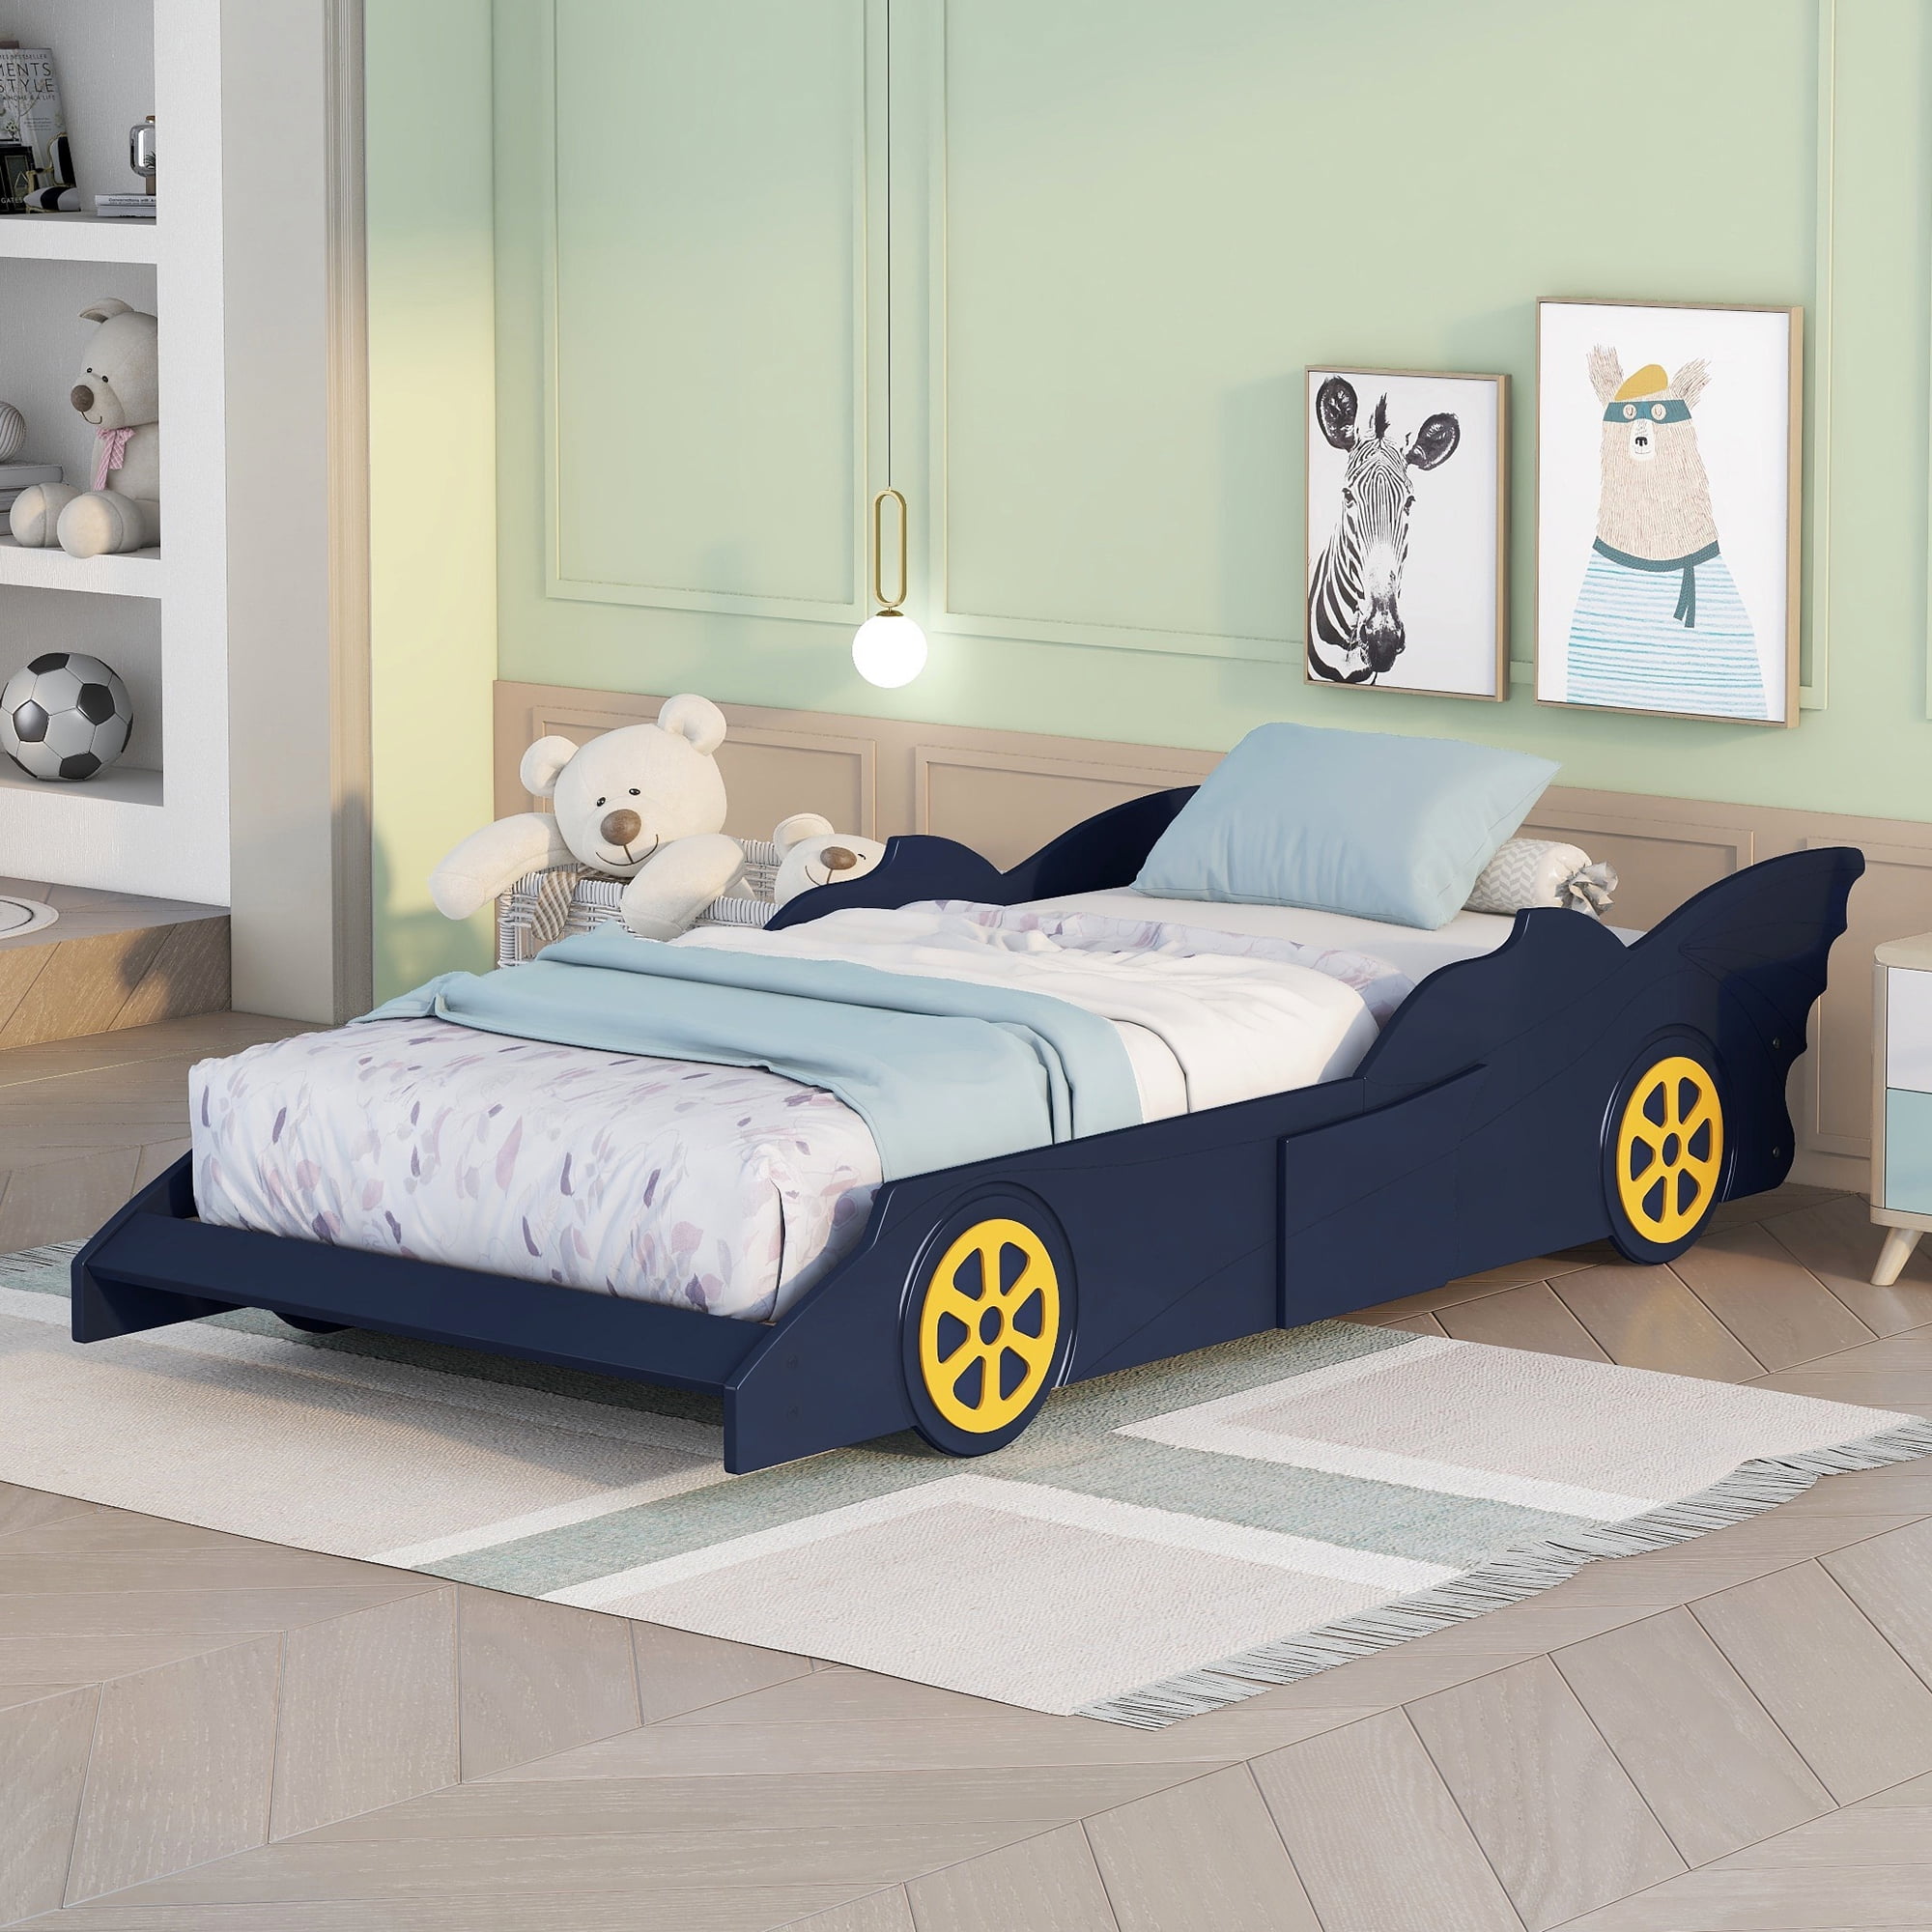 Euroco Wood Race Car-Shaped Twin Size Platform Bed for Kids’ Bedroom ...